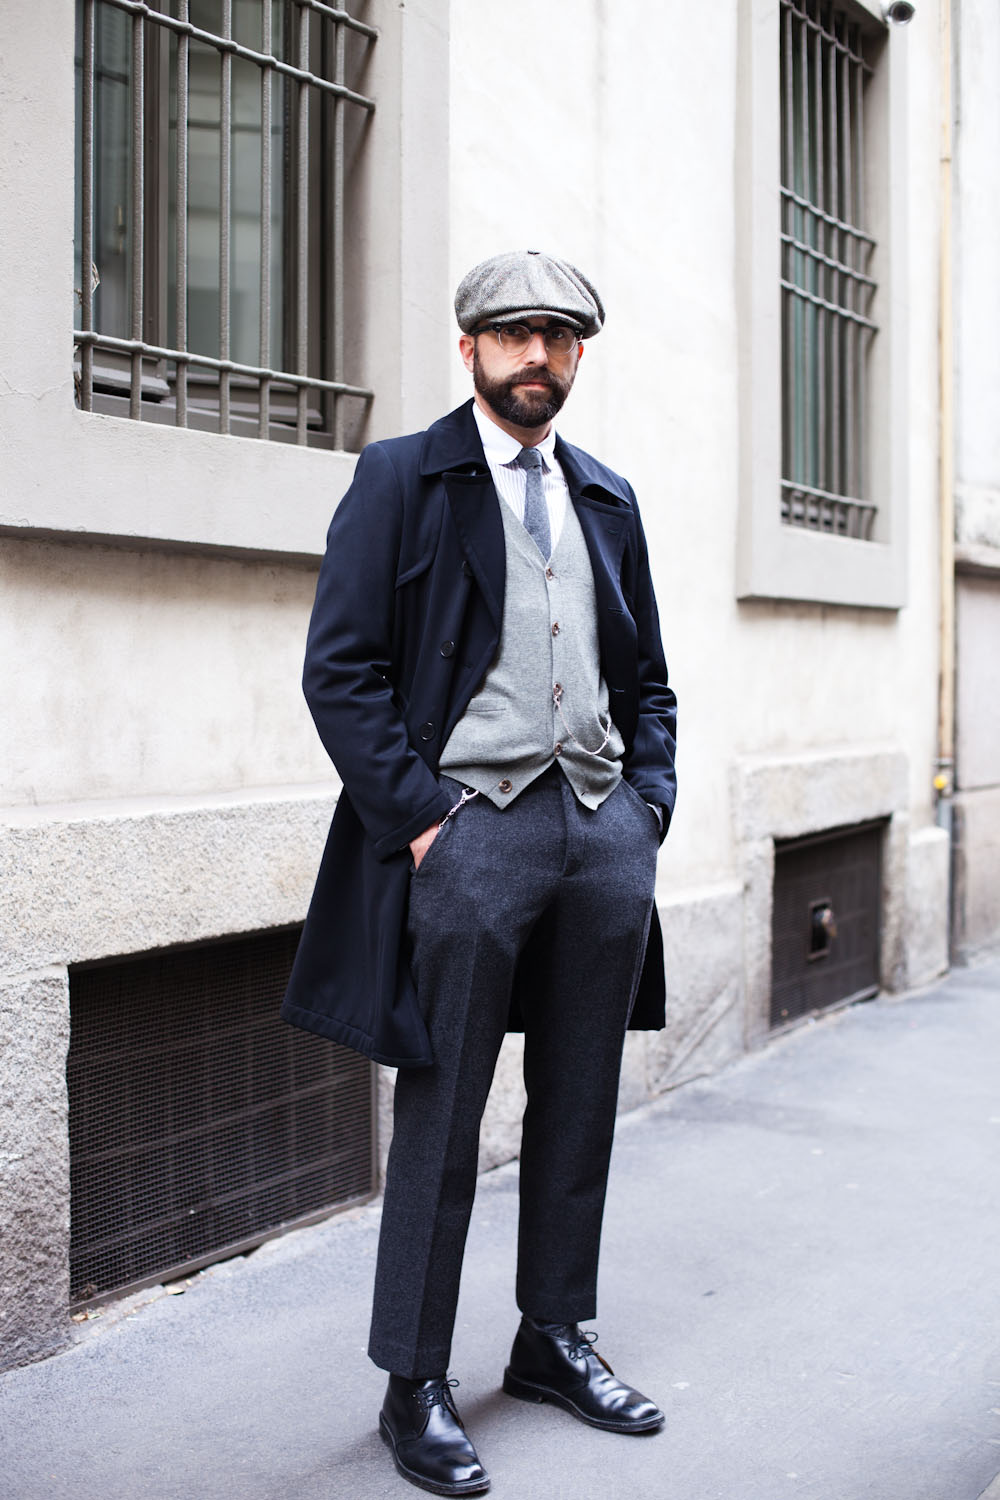 The Perfect Gentleman - Via Bigli, Milan